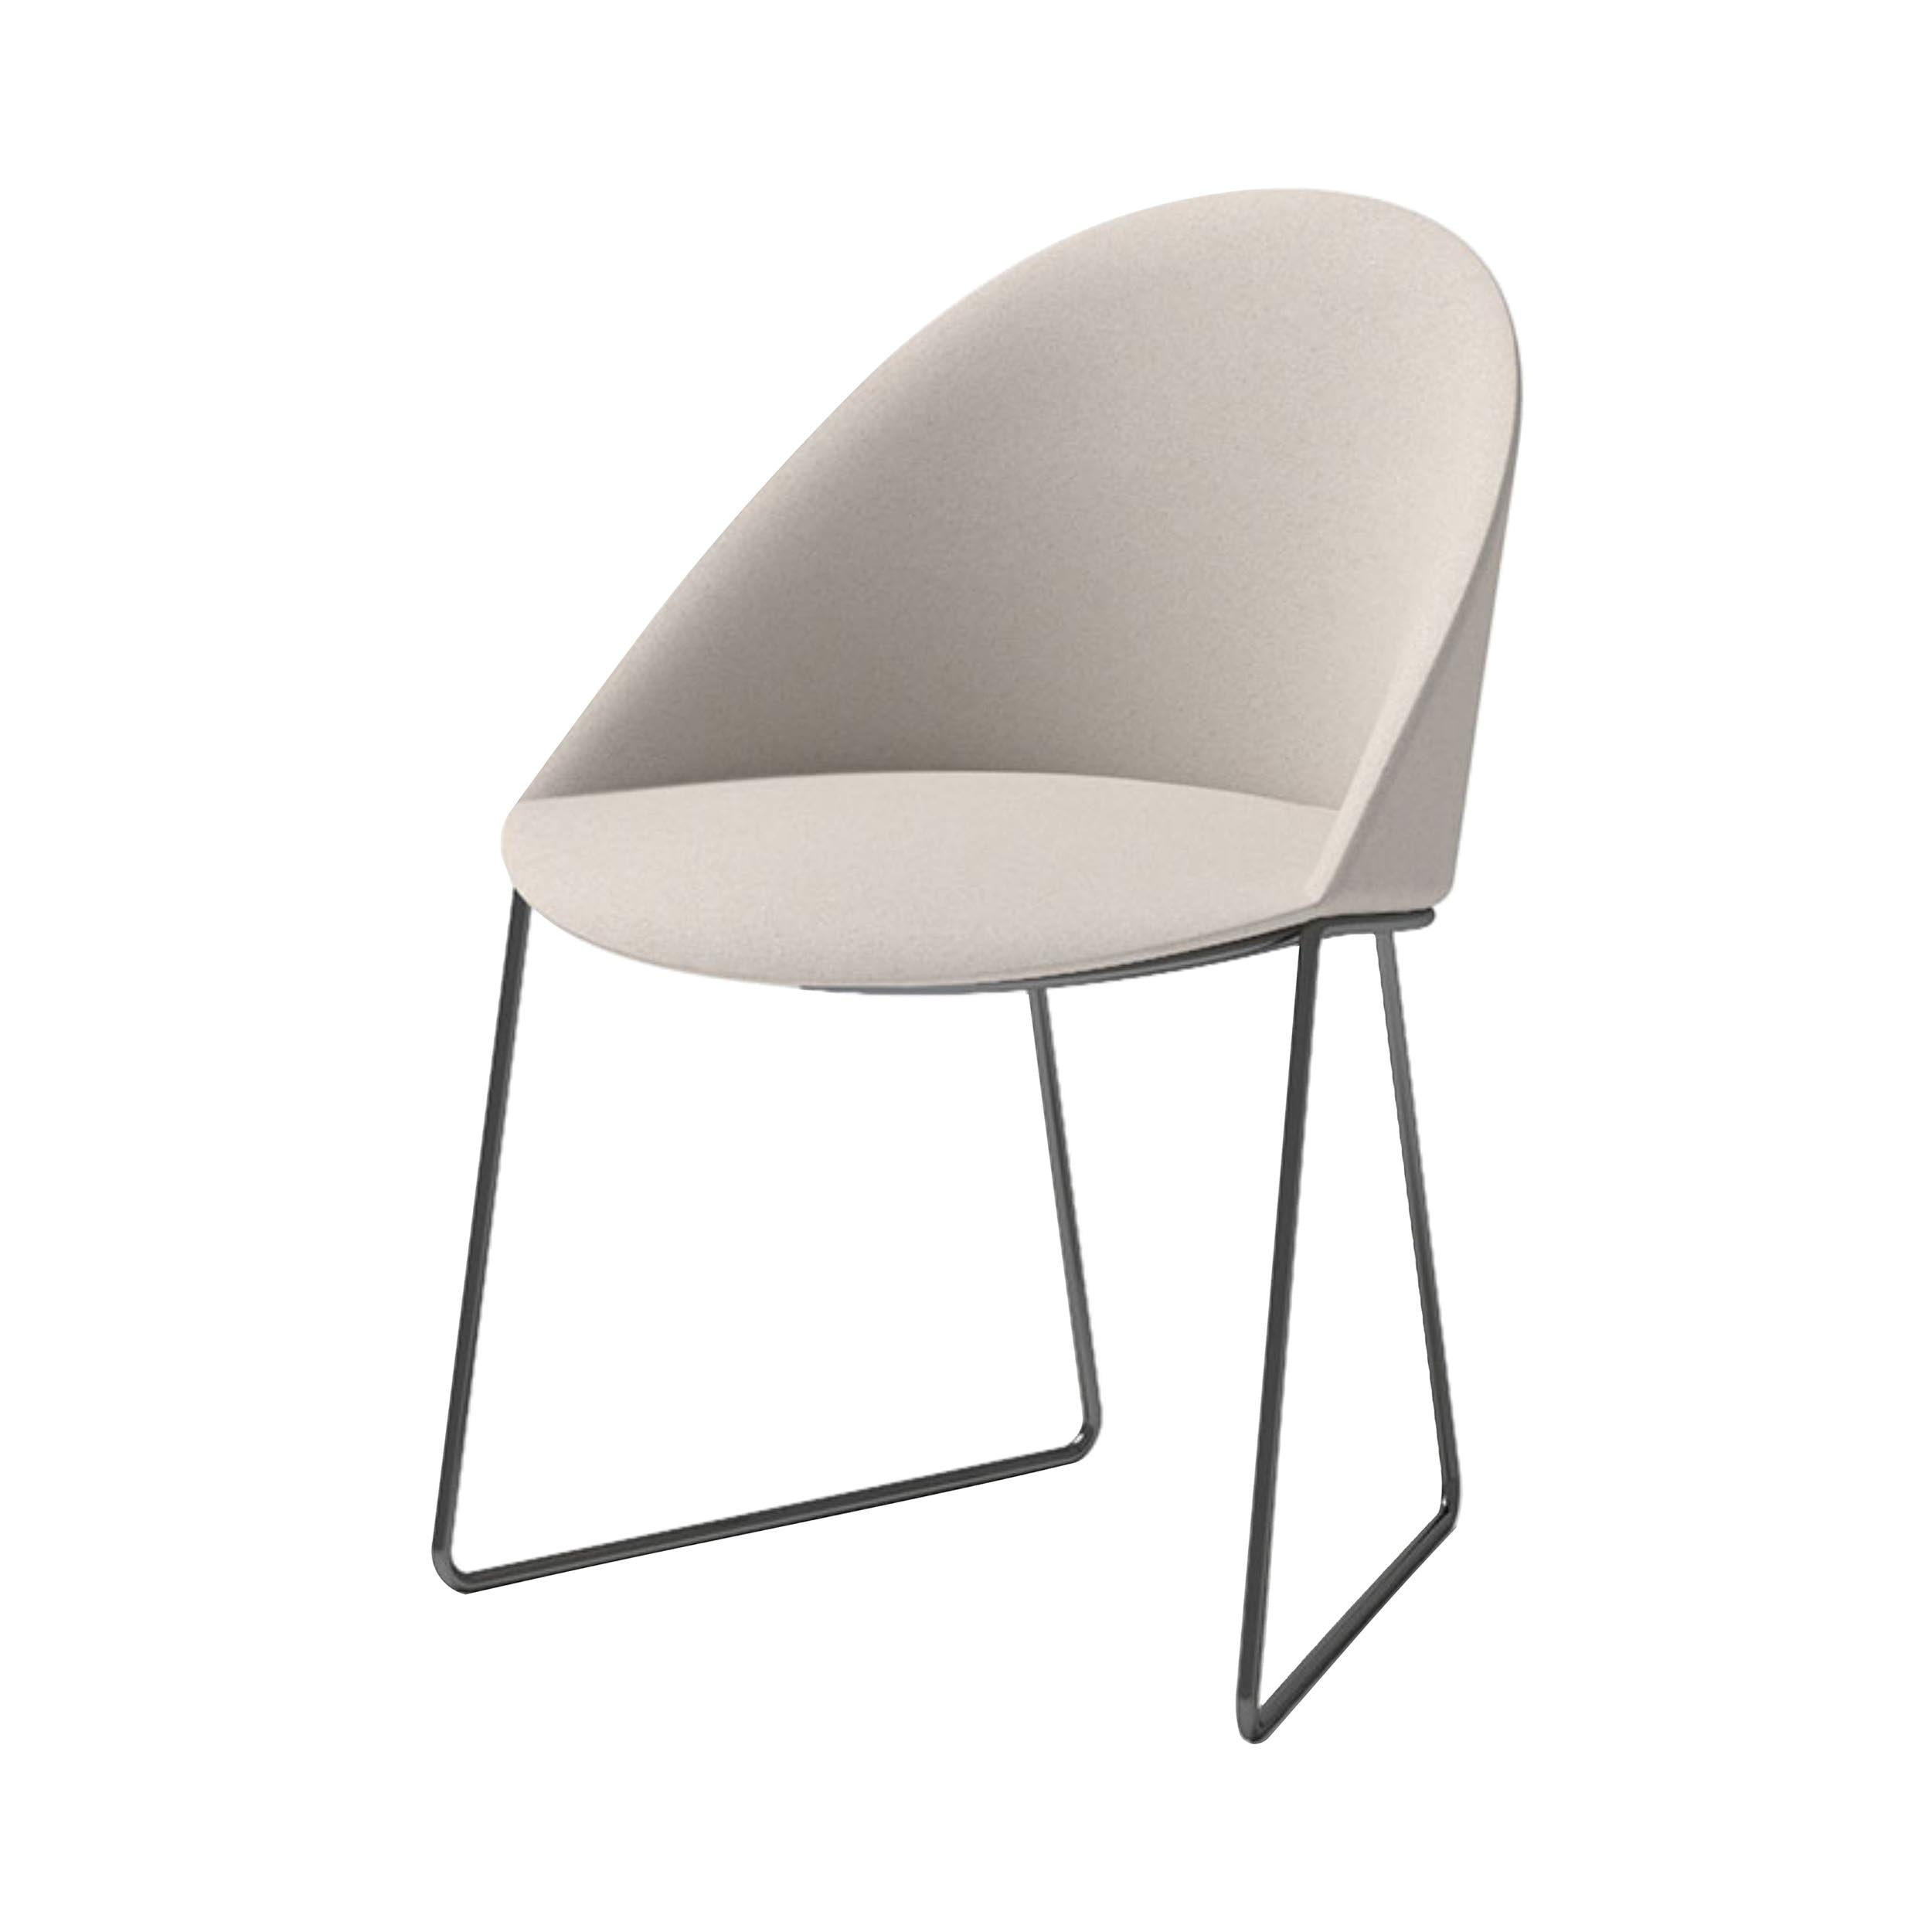 Circa Dining Chair: Sled Base + Black Nickel